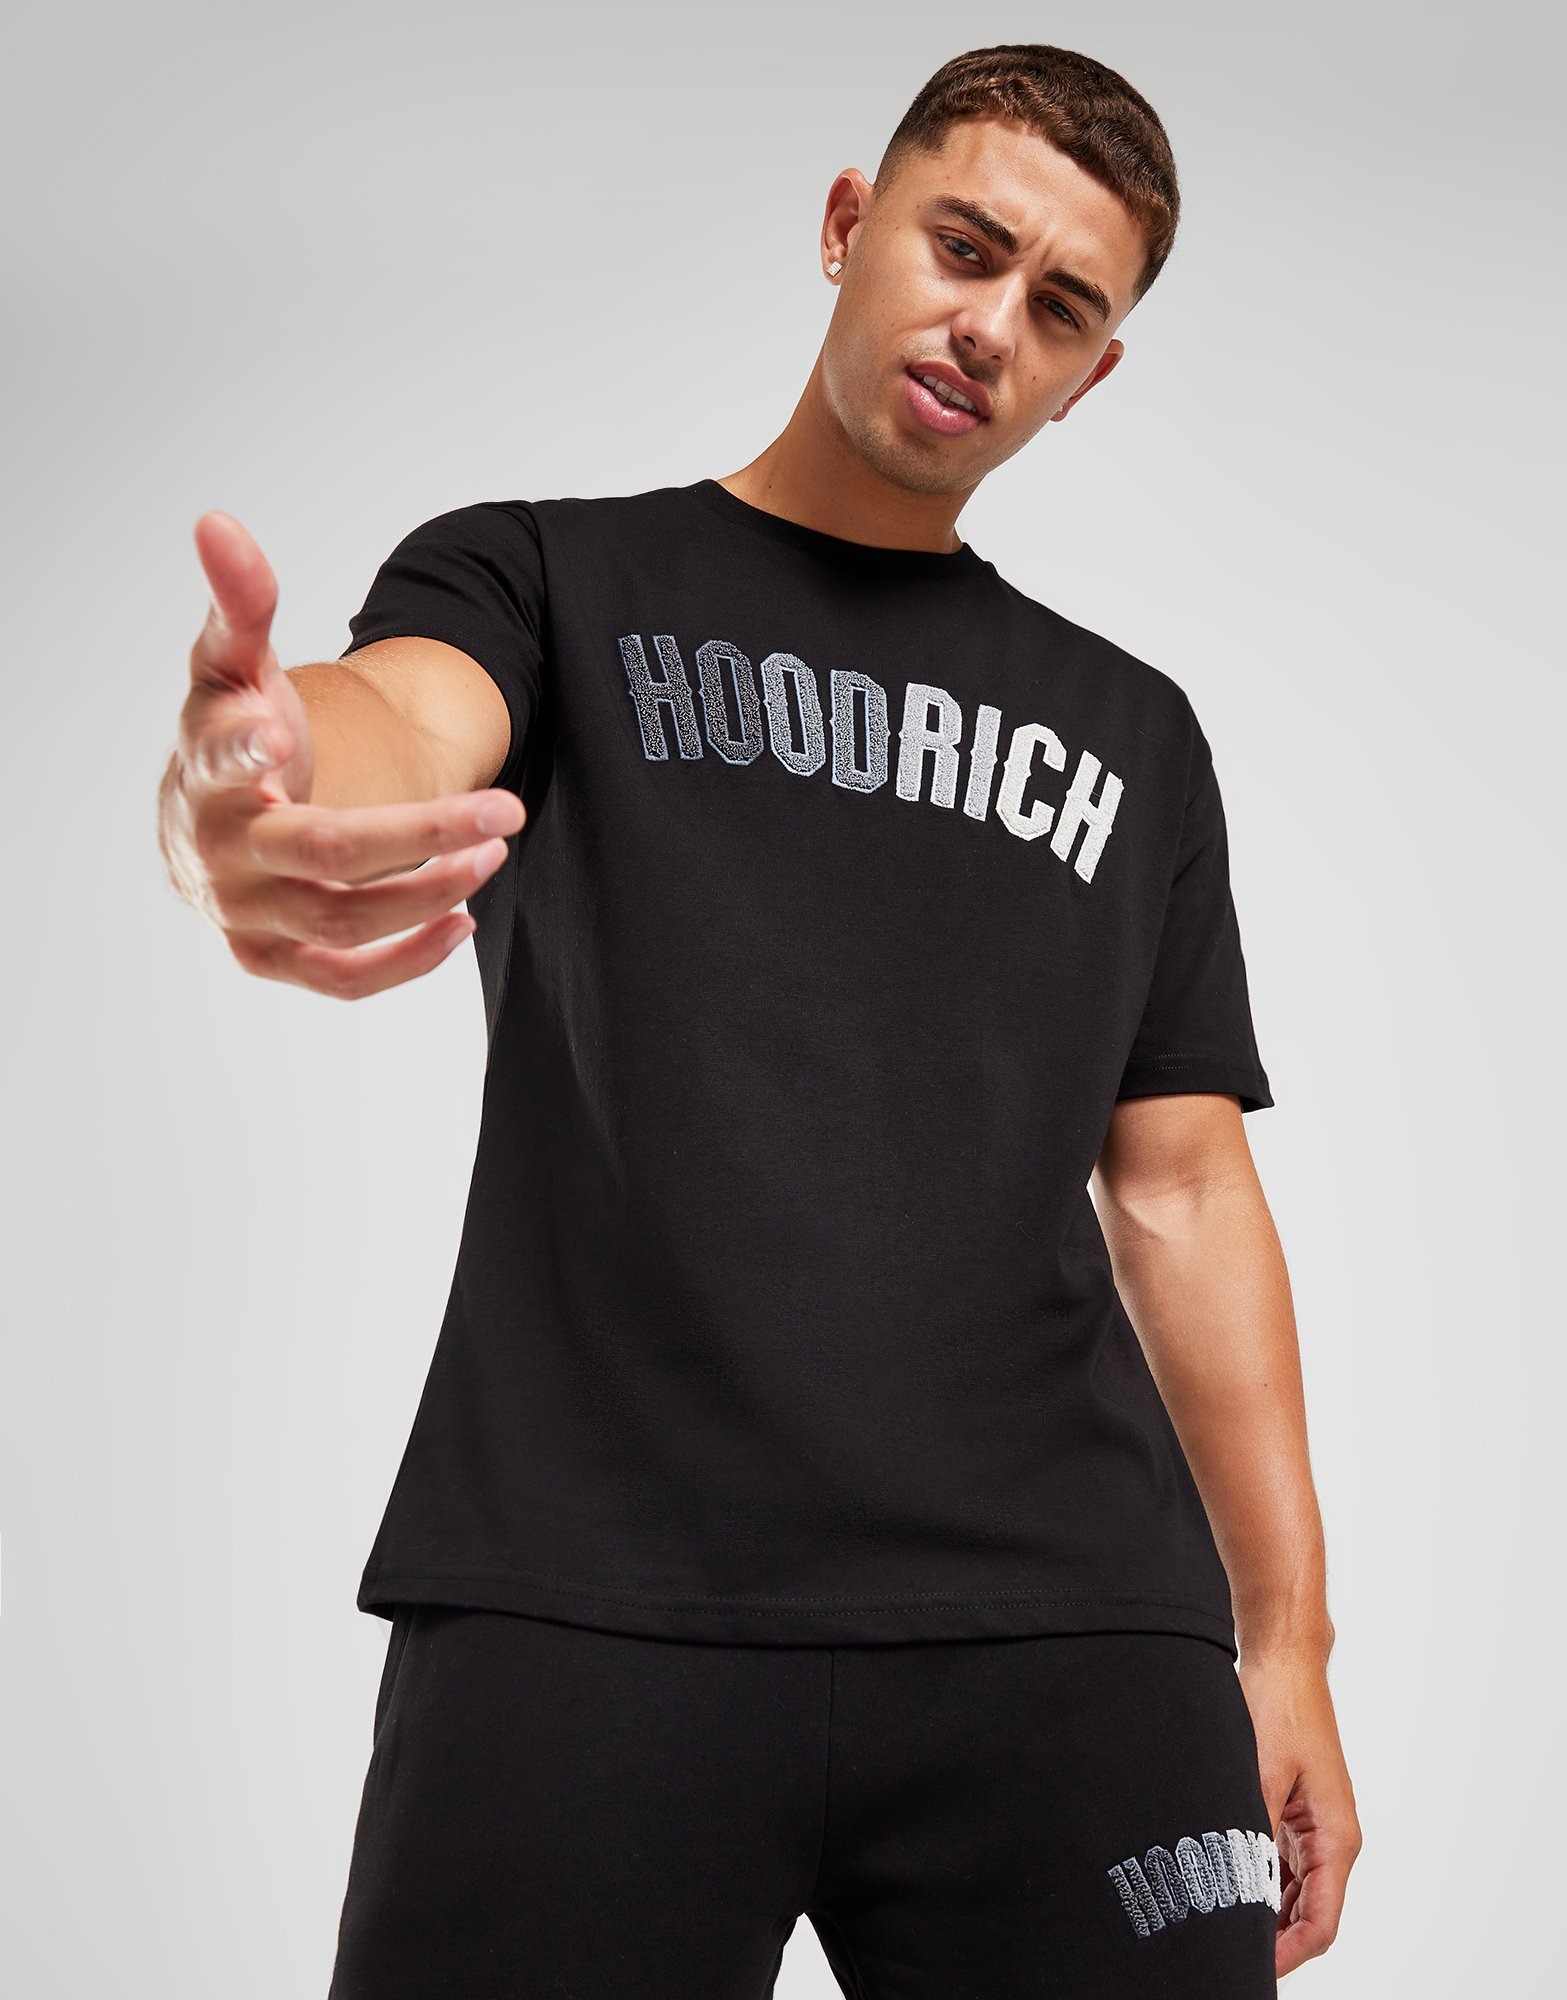 Black Hoodrich Kraze T-Shirt - JD Sports Ireland